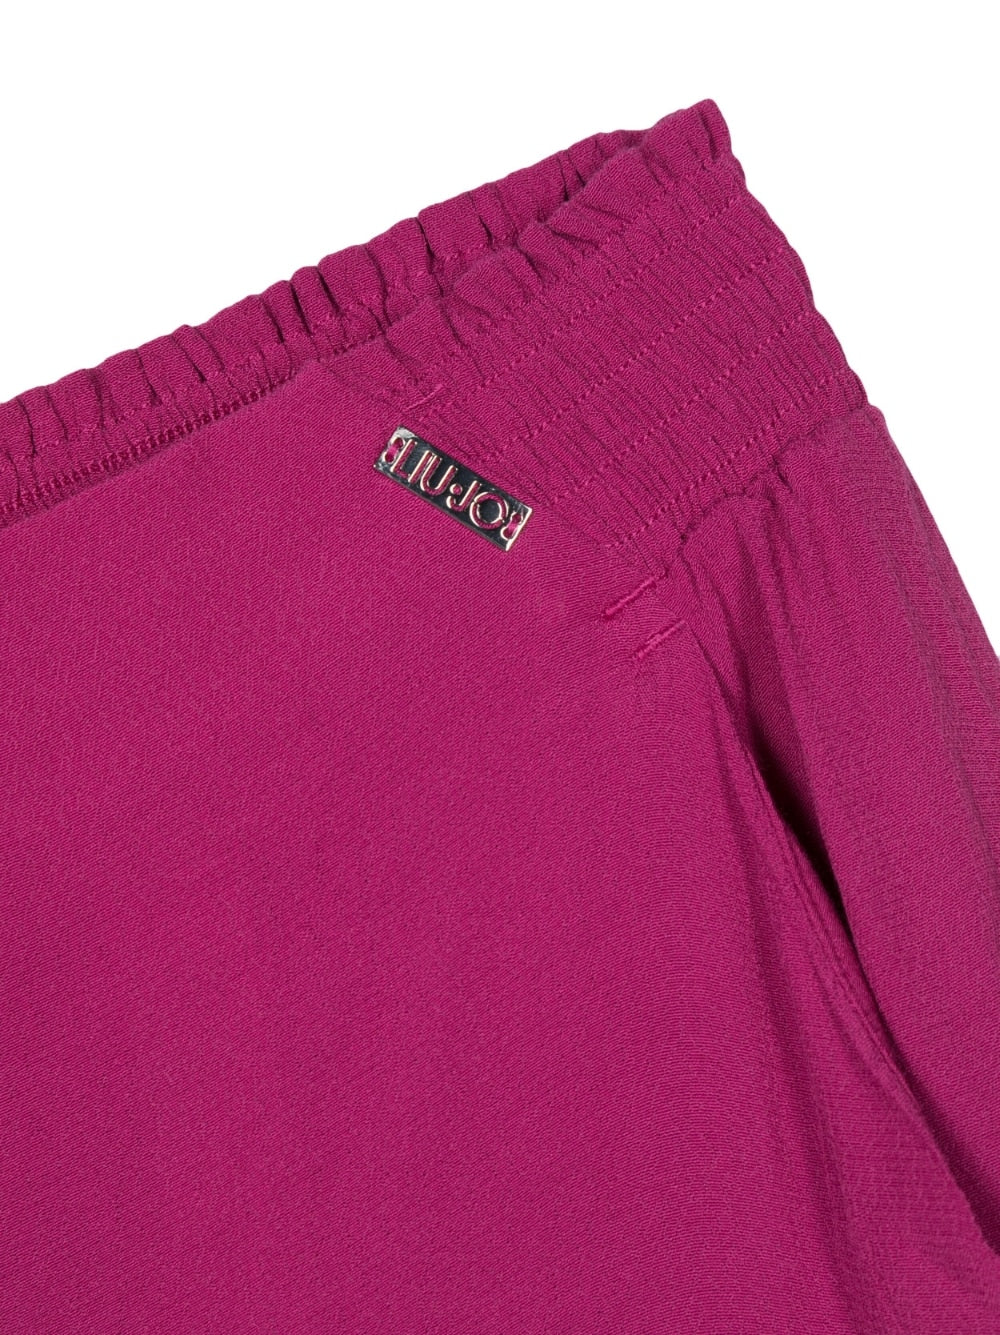 Fuchsia trousers for girls